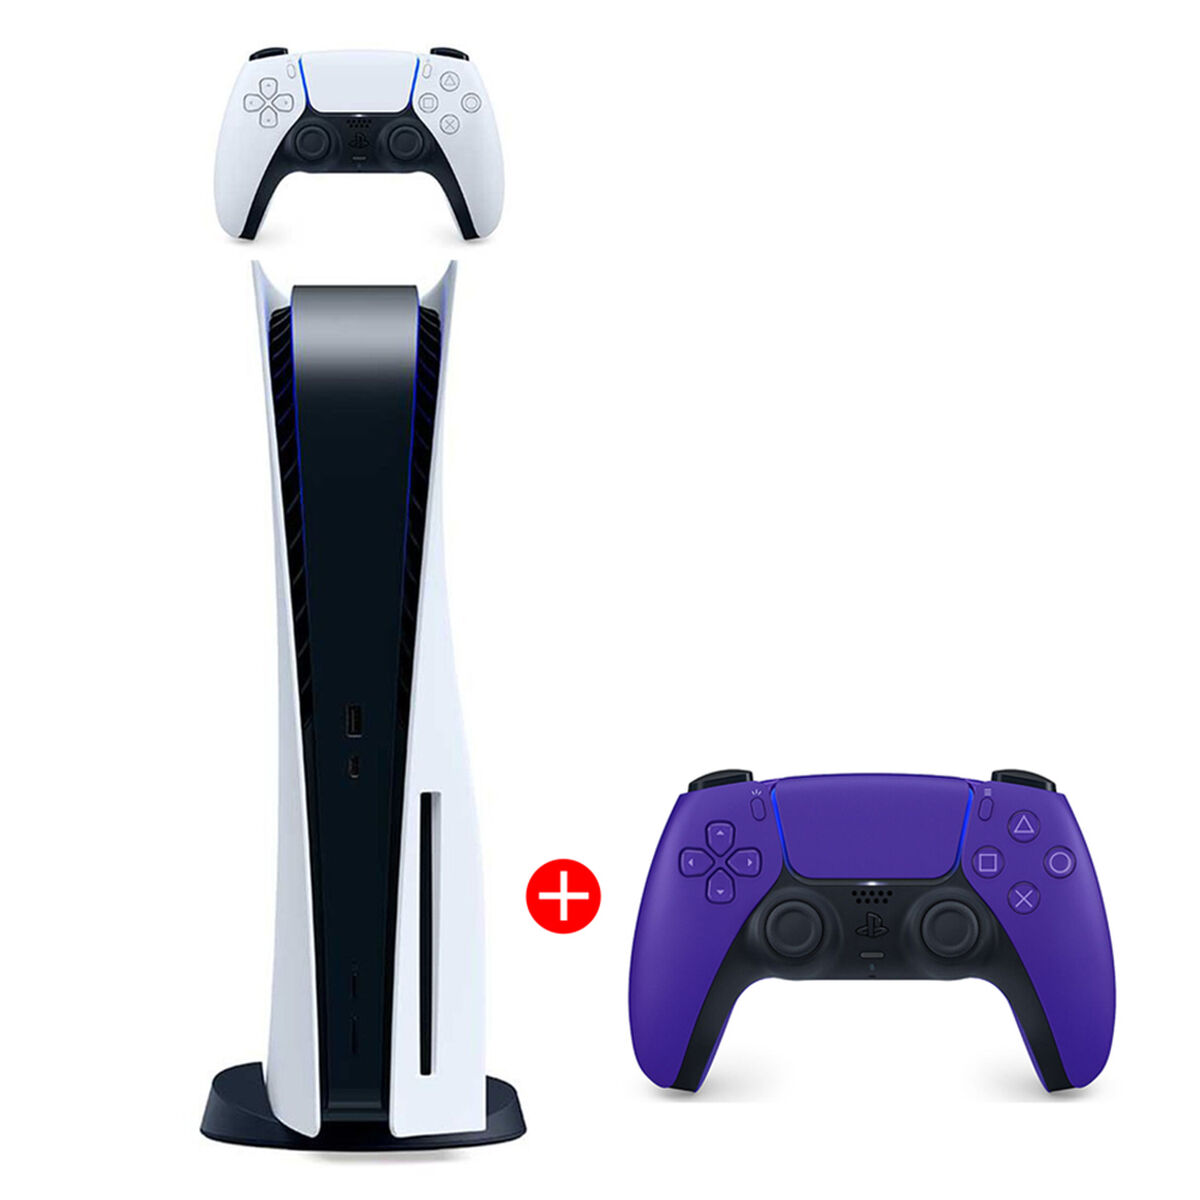 Comprar Sony mando dualsense ps5 galactic purple v2 